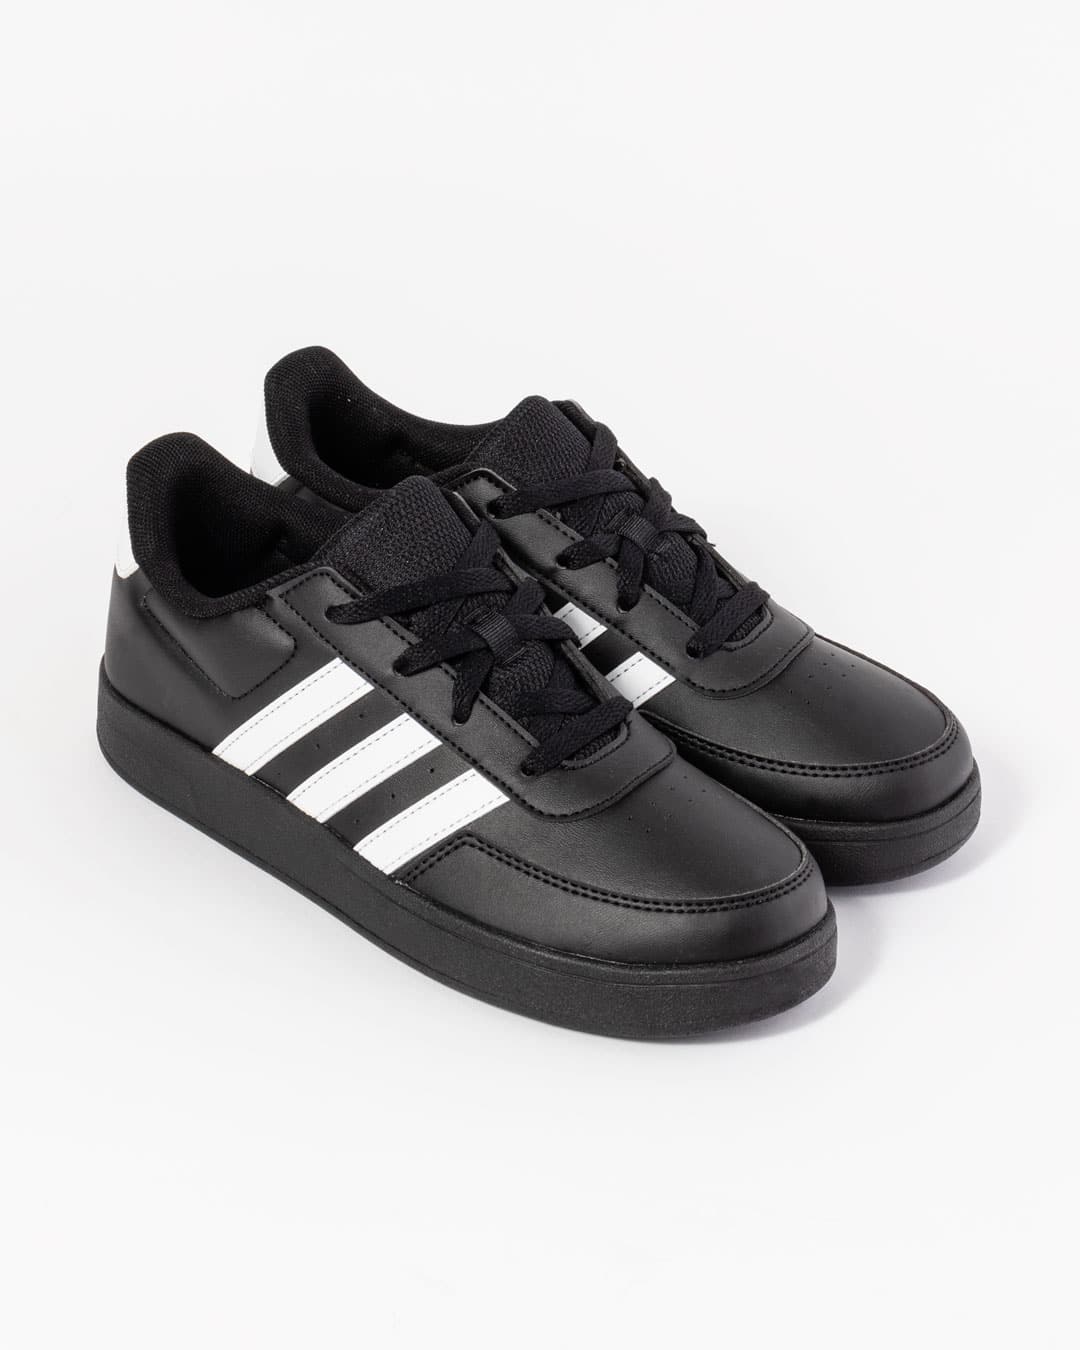 Adidas Children's sneakers black white stripes side shot